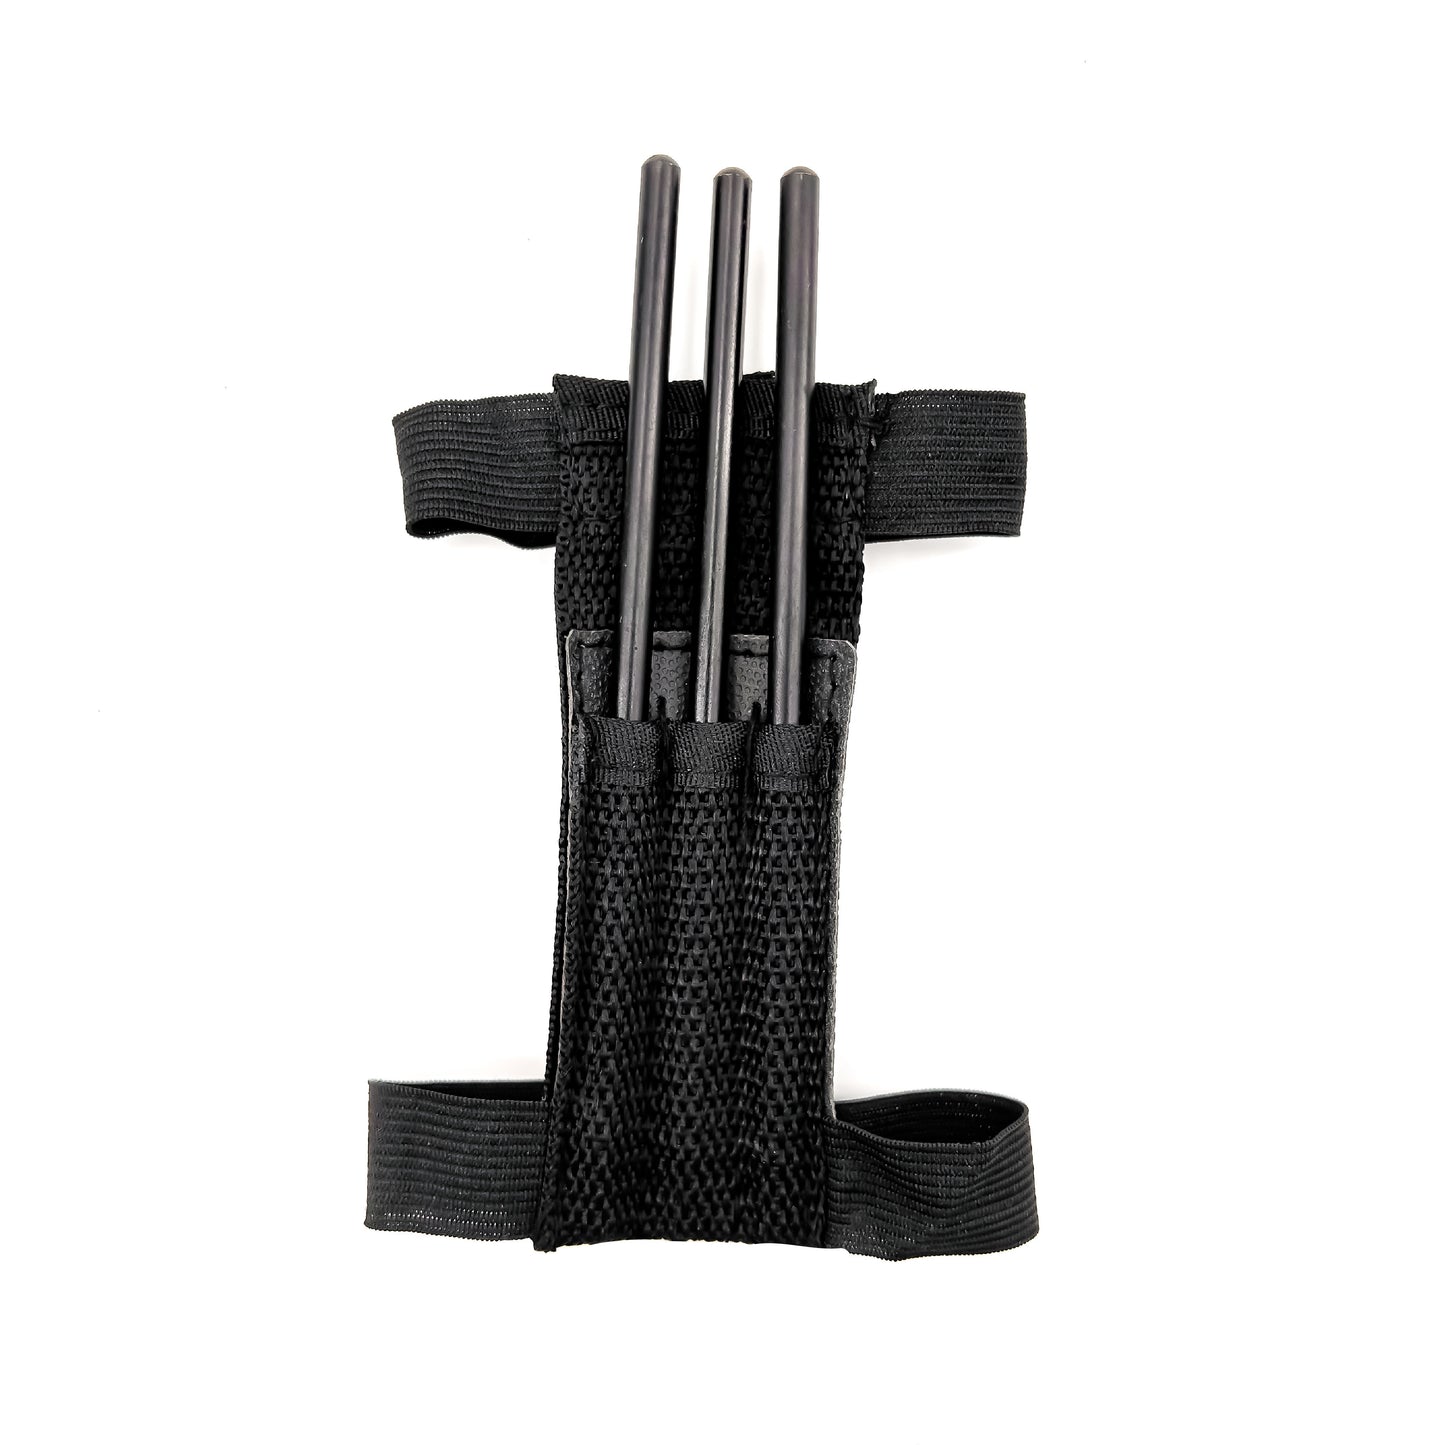 Ninja Assassin Arm Spikes 3pcs Set With Belt Pouch-3